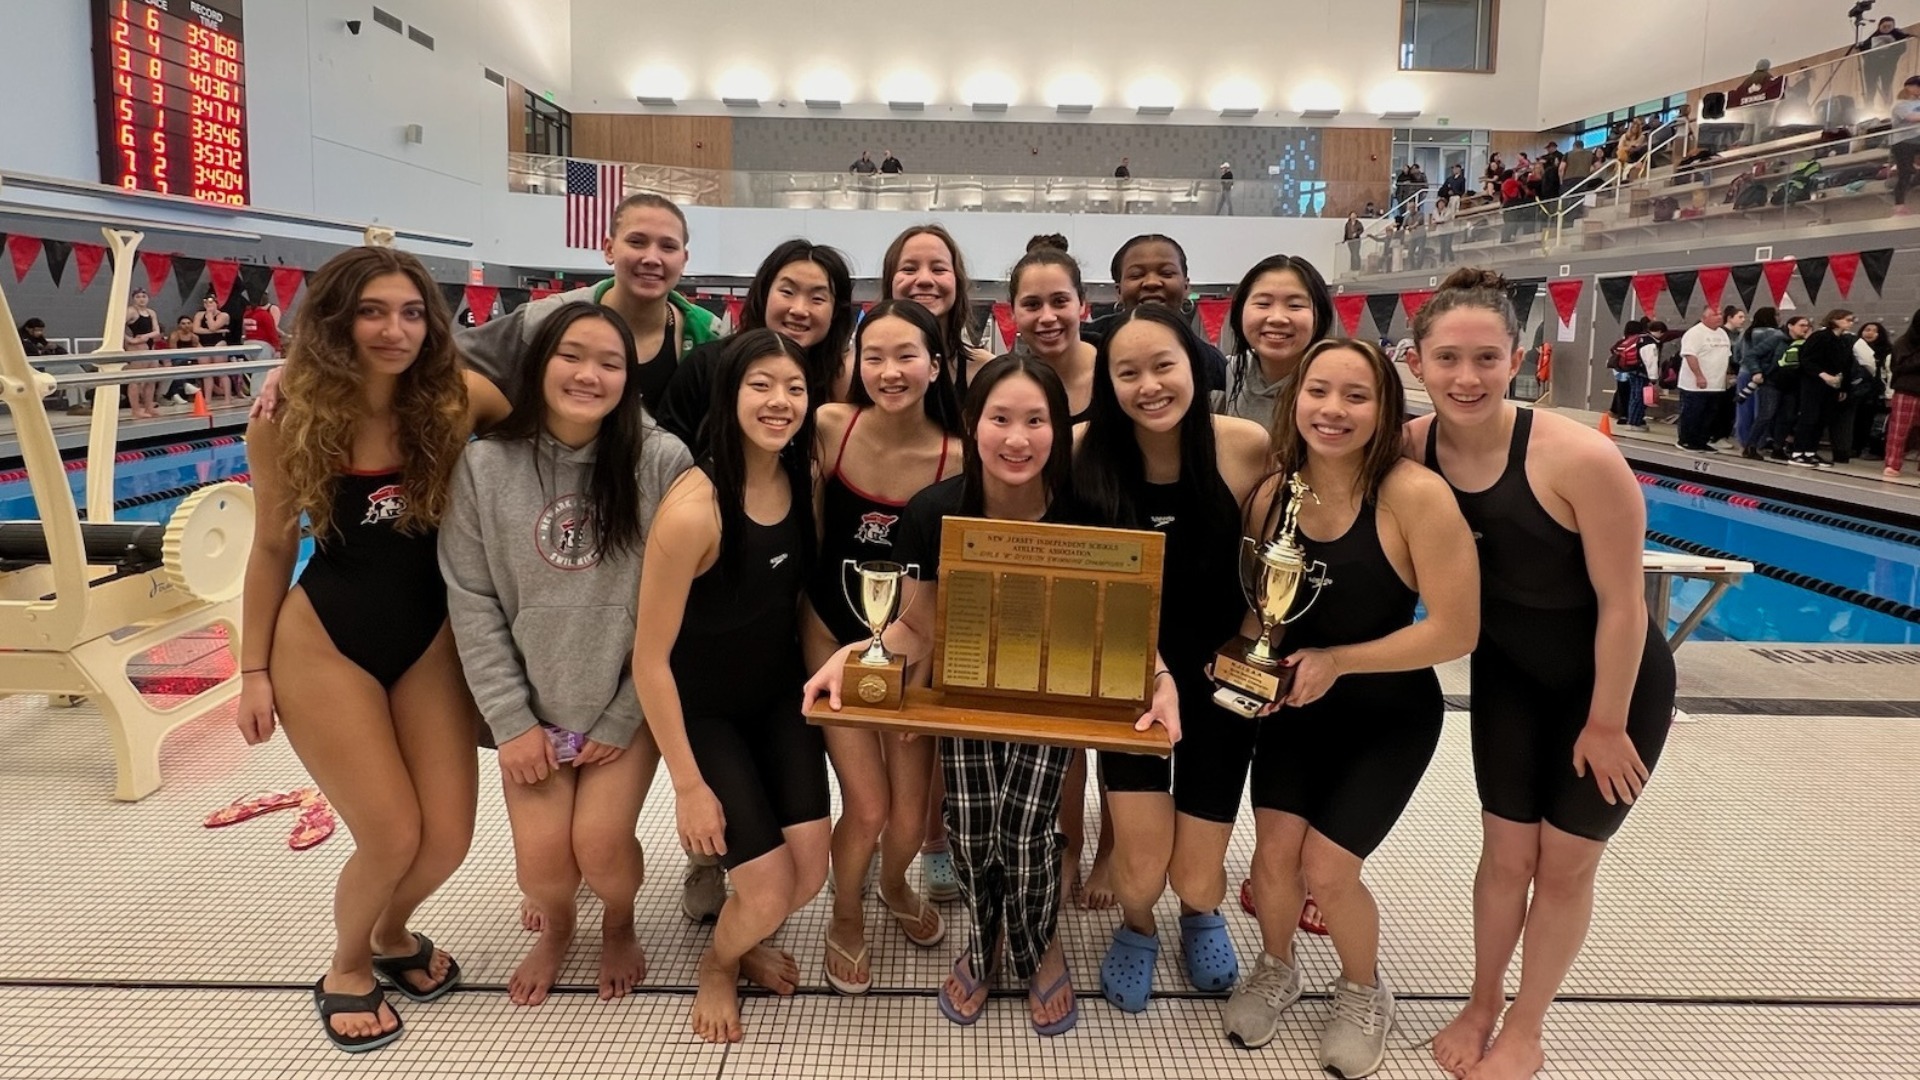 Newark AcademySlide 4 - Girls' Swimming Wins Second Consecutive Prep B Title